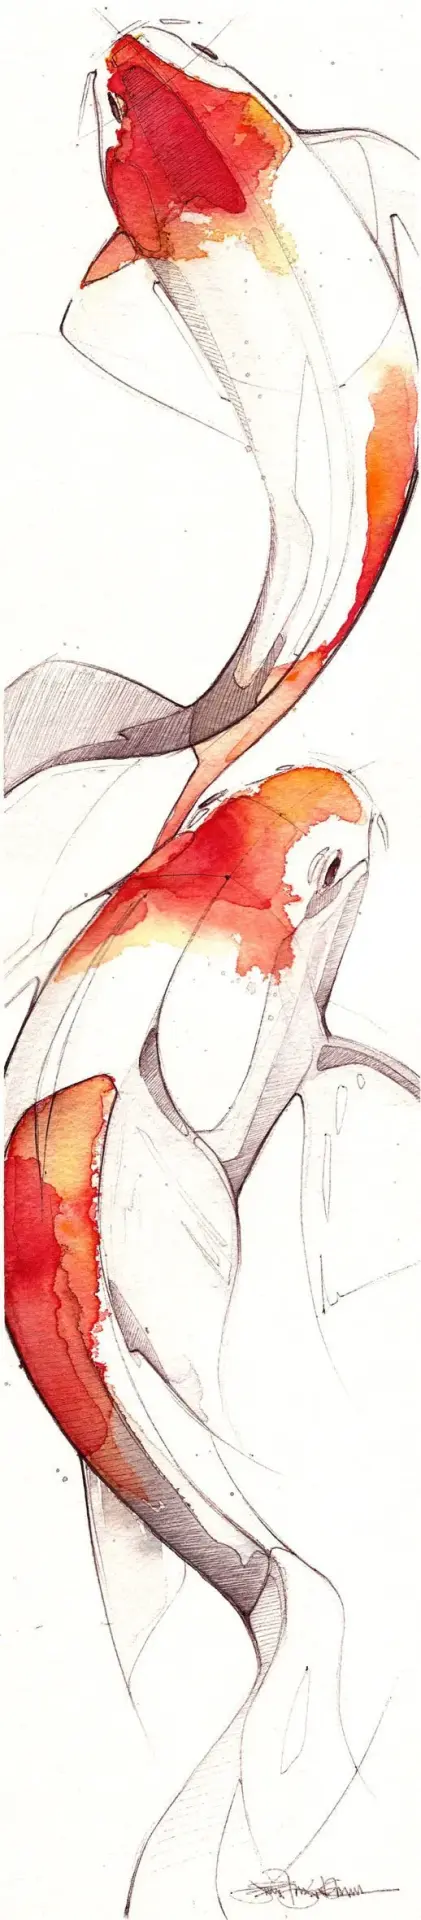 Bdw illustration animal koi jennifer kraska